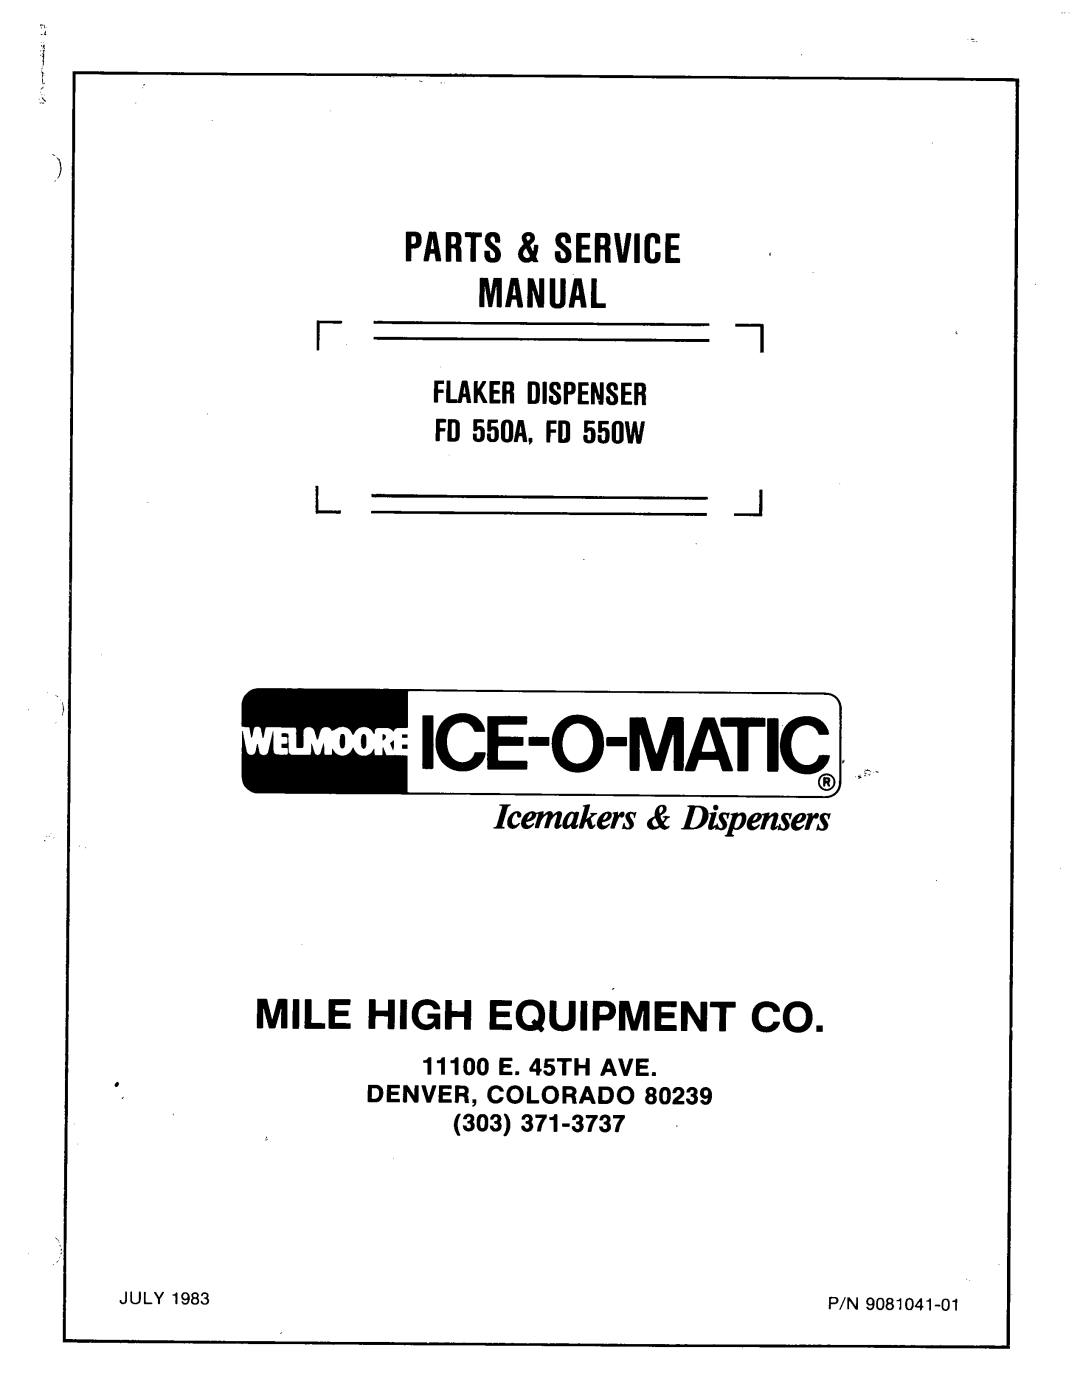 Ice-O-Matic FD550 manual 